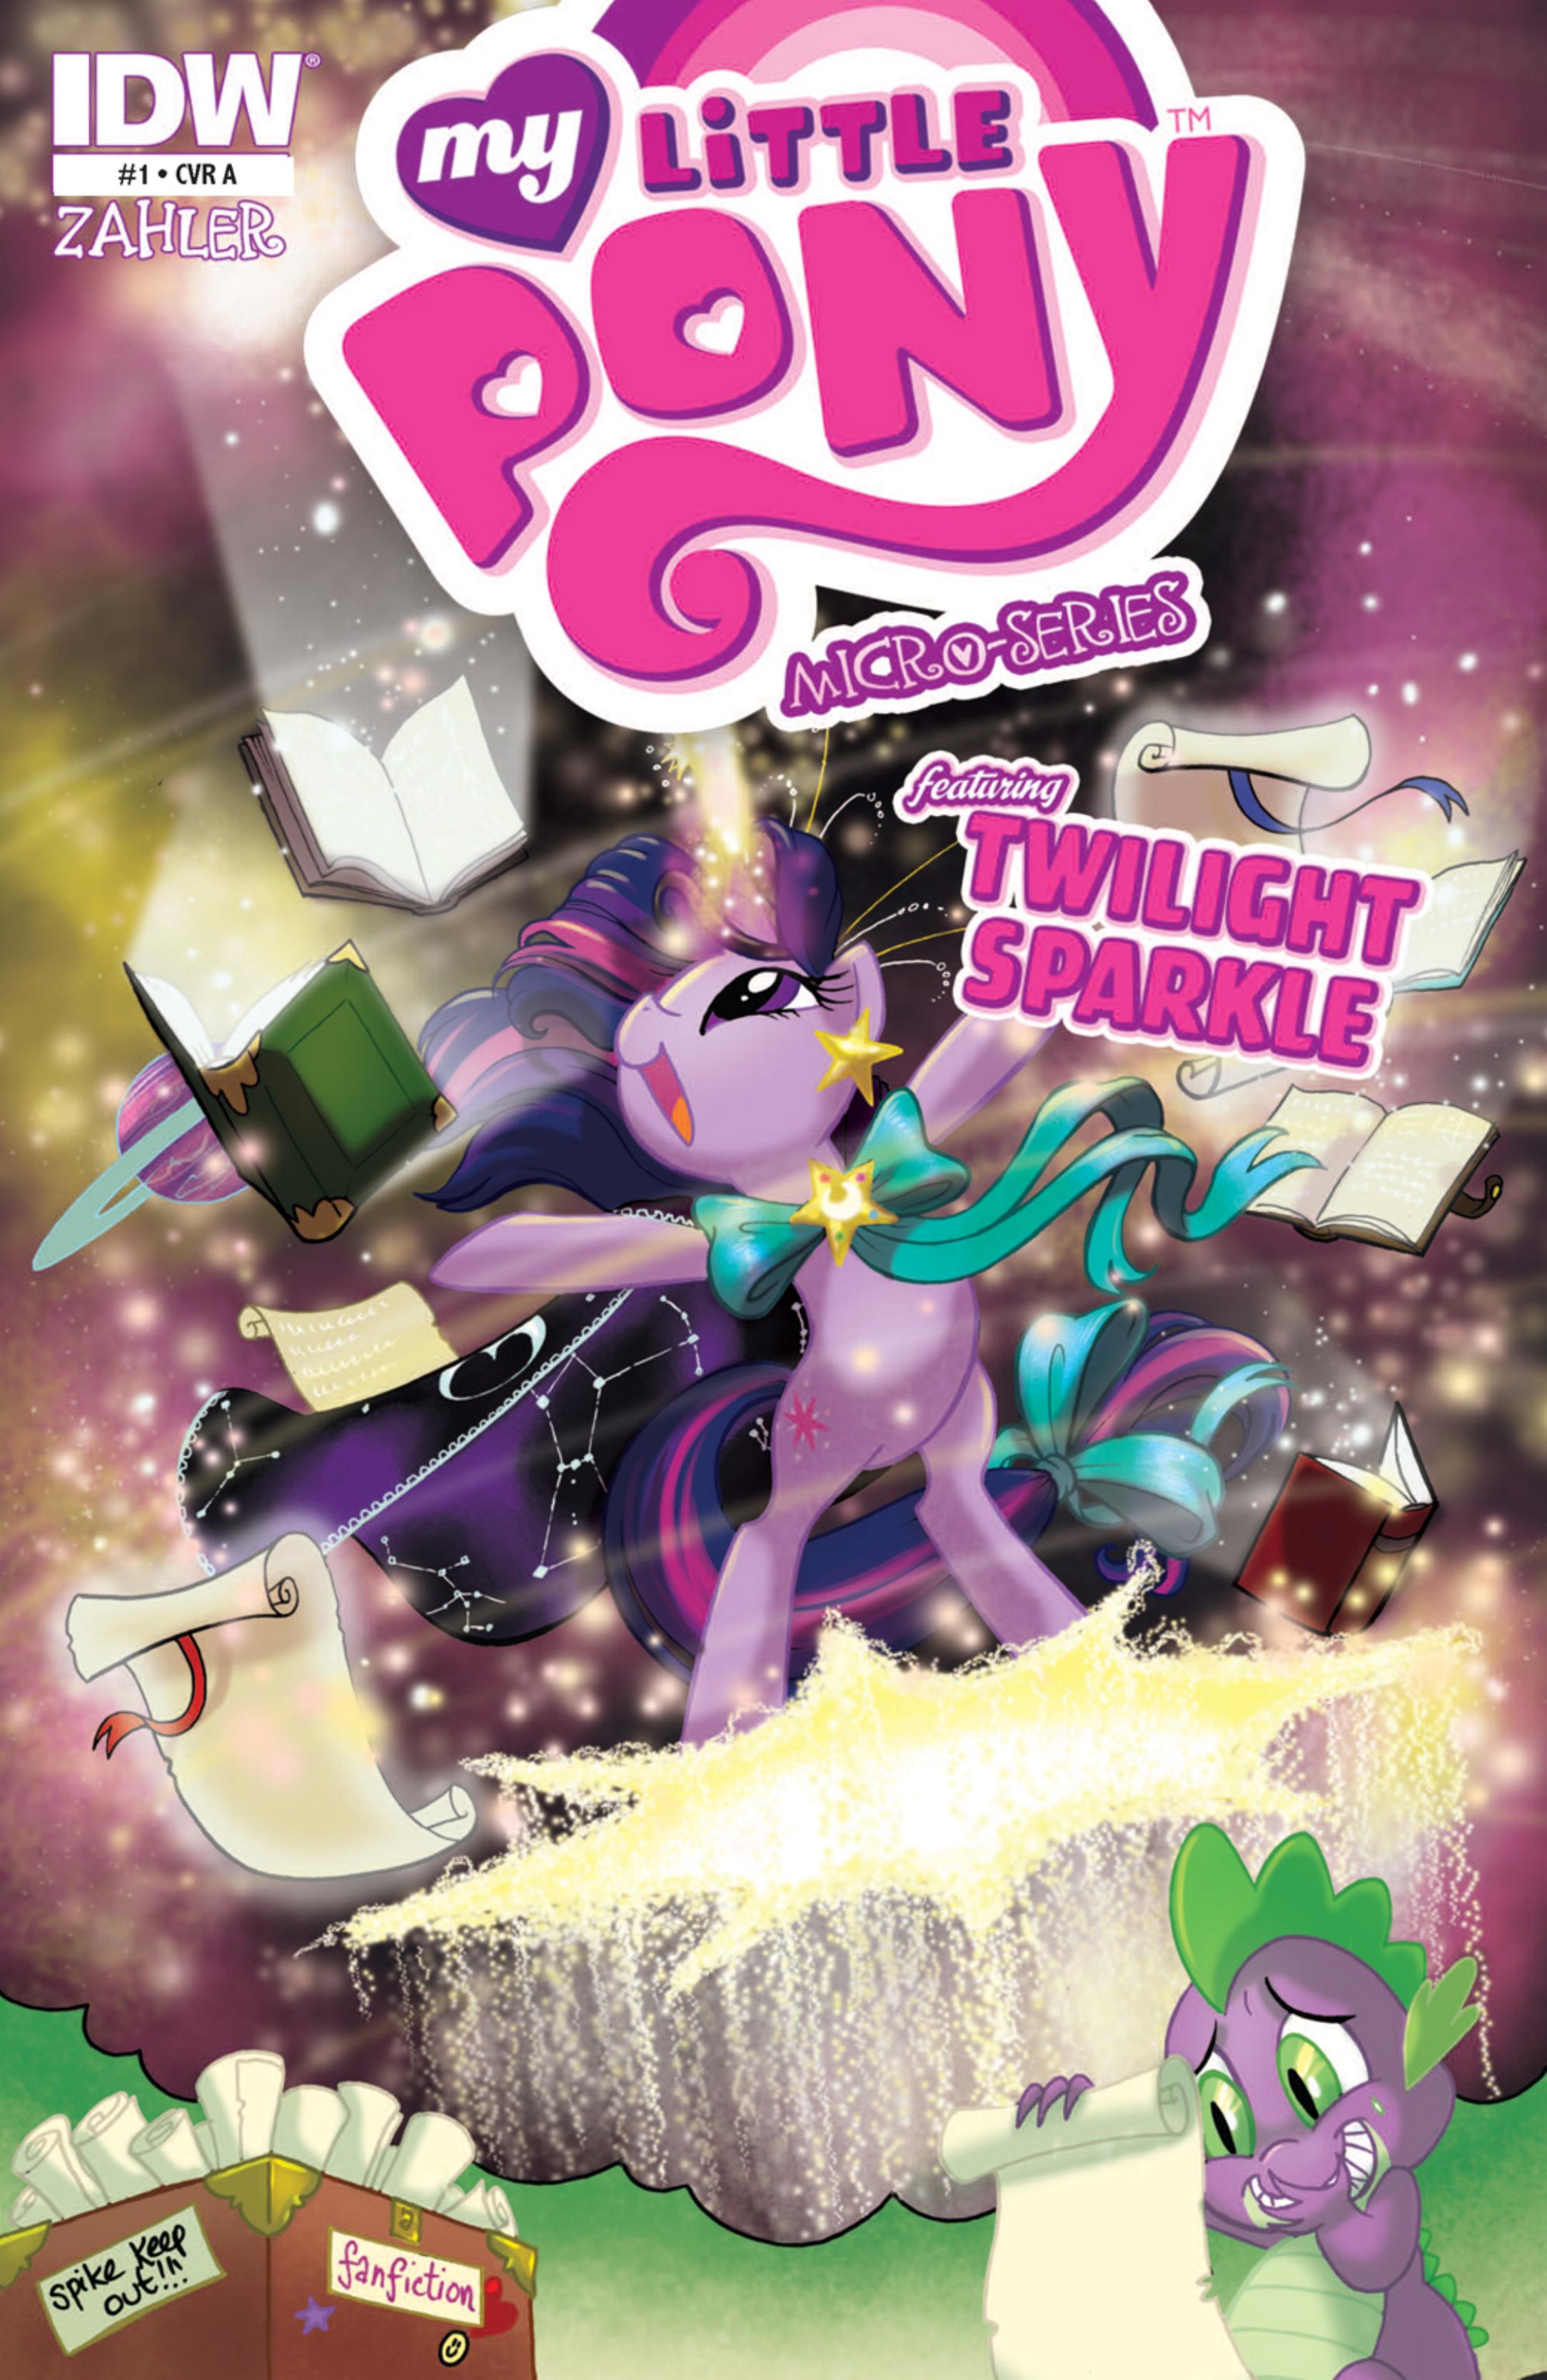 My Little Pony: Micro Series #1 - Twilight Sparkle by Thom Zahler